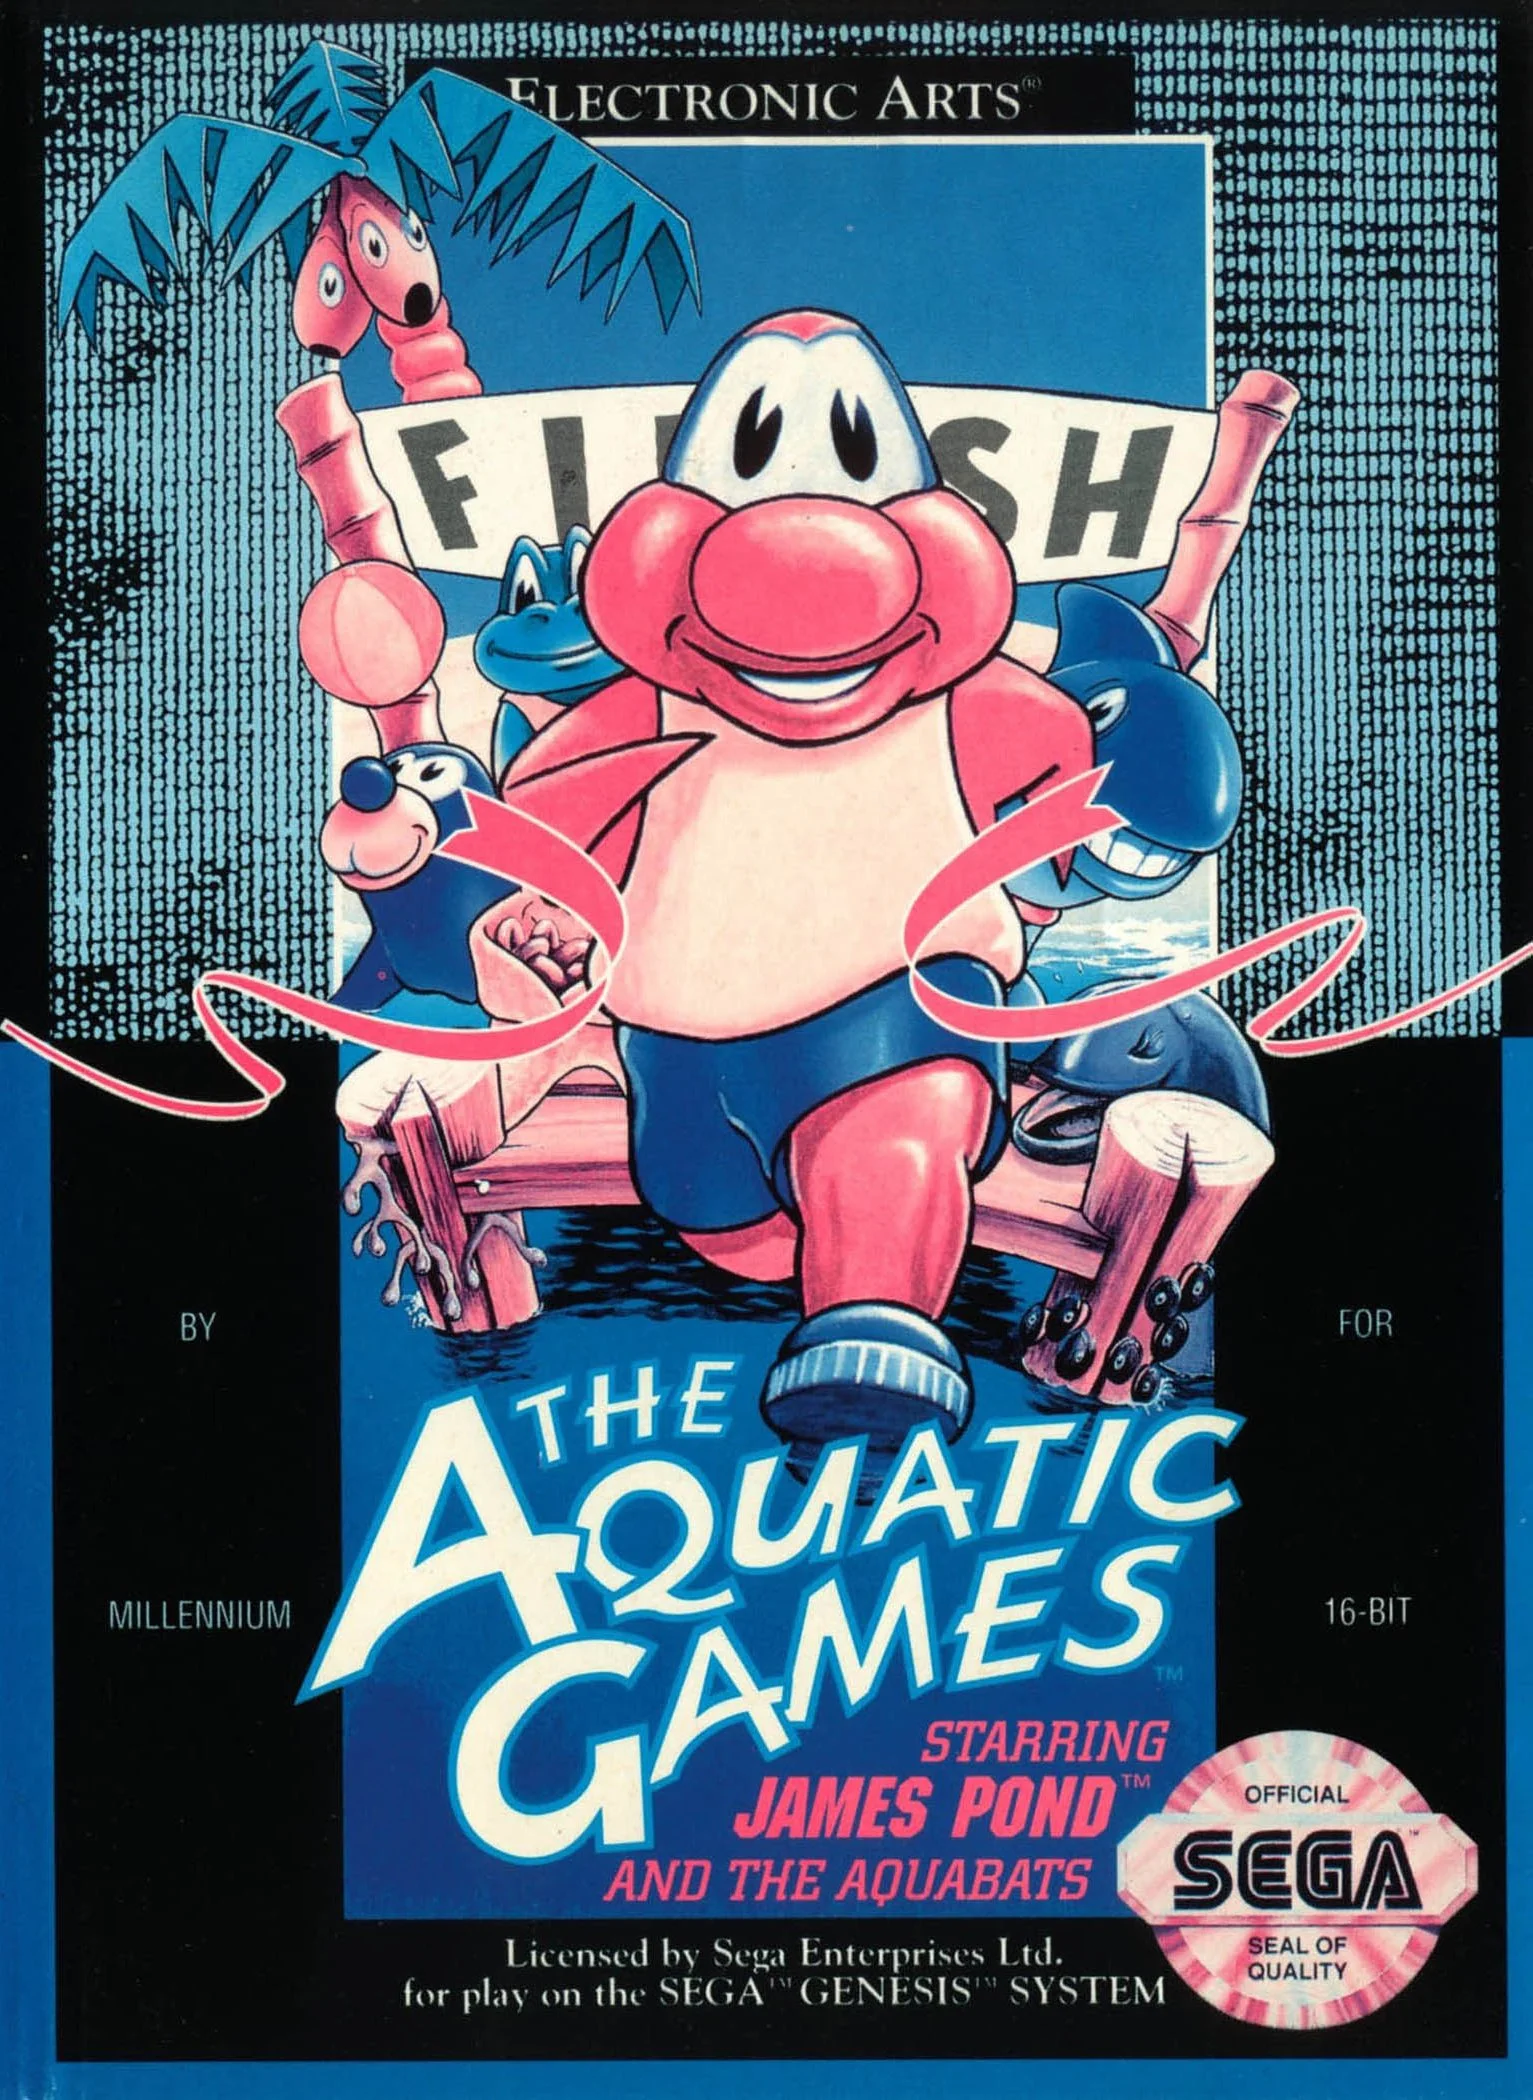 The Aquatic Games - Starring James Pond